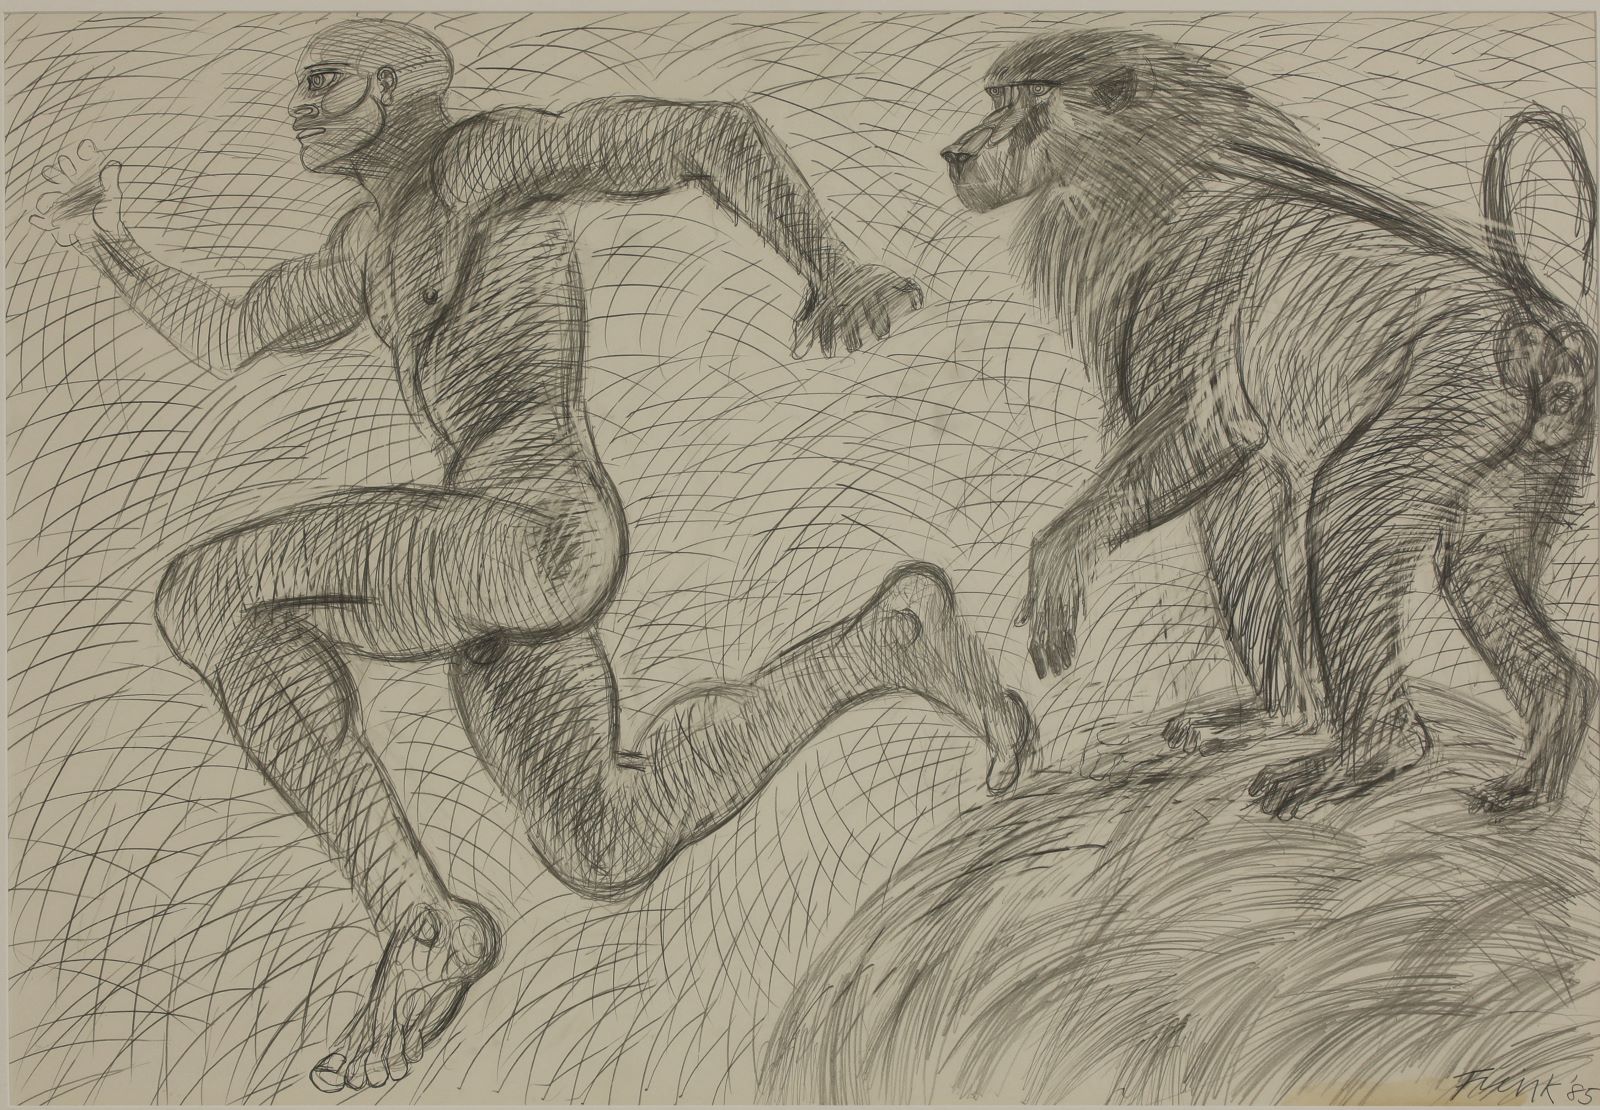 Baboon and Running man